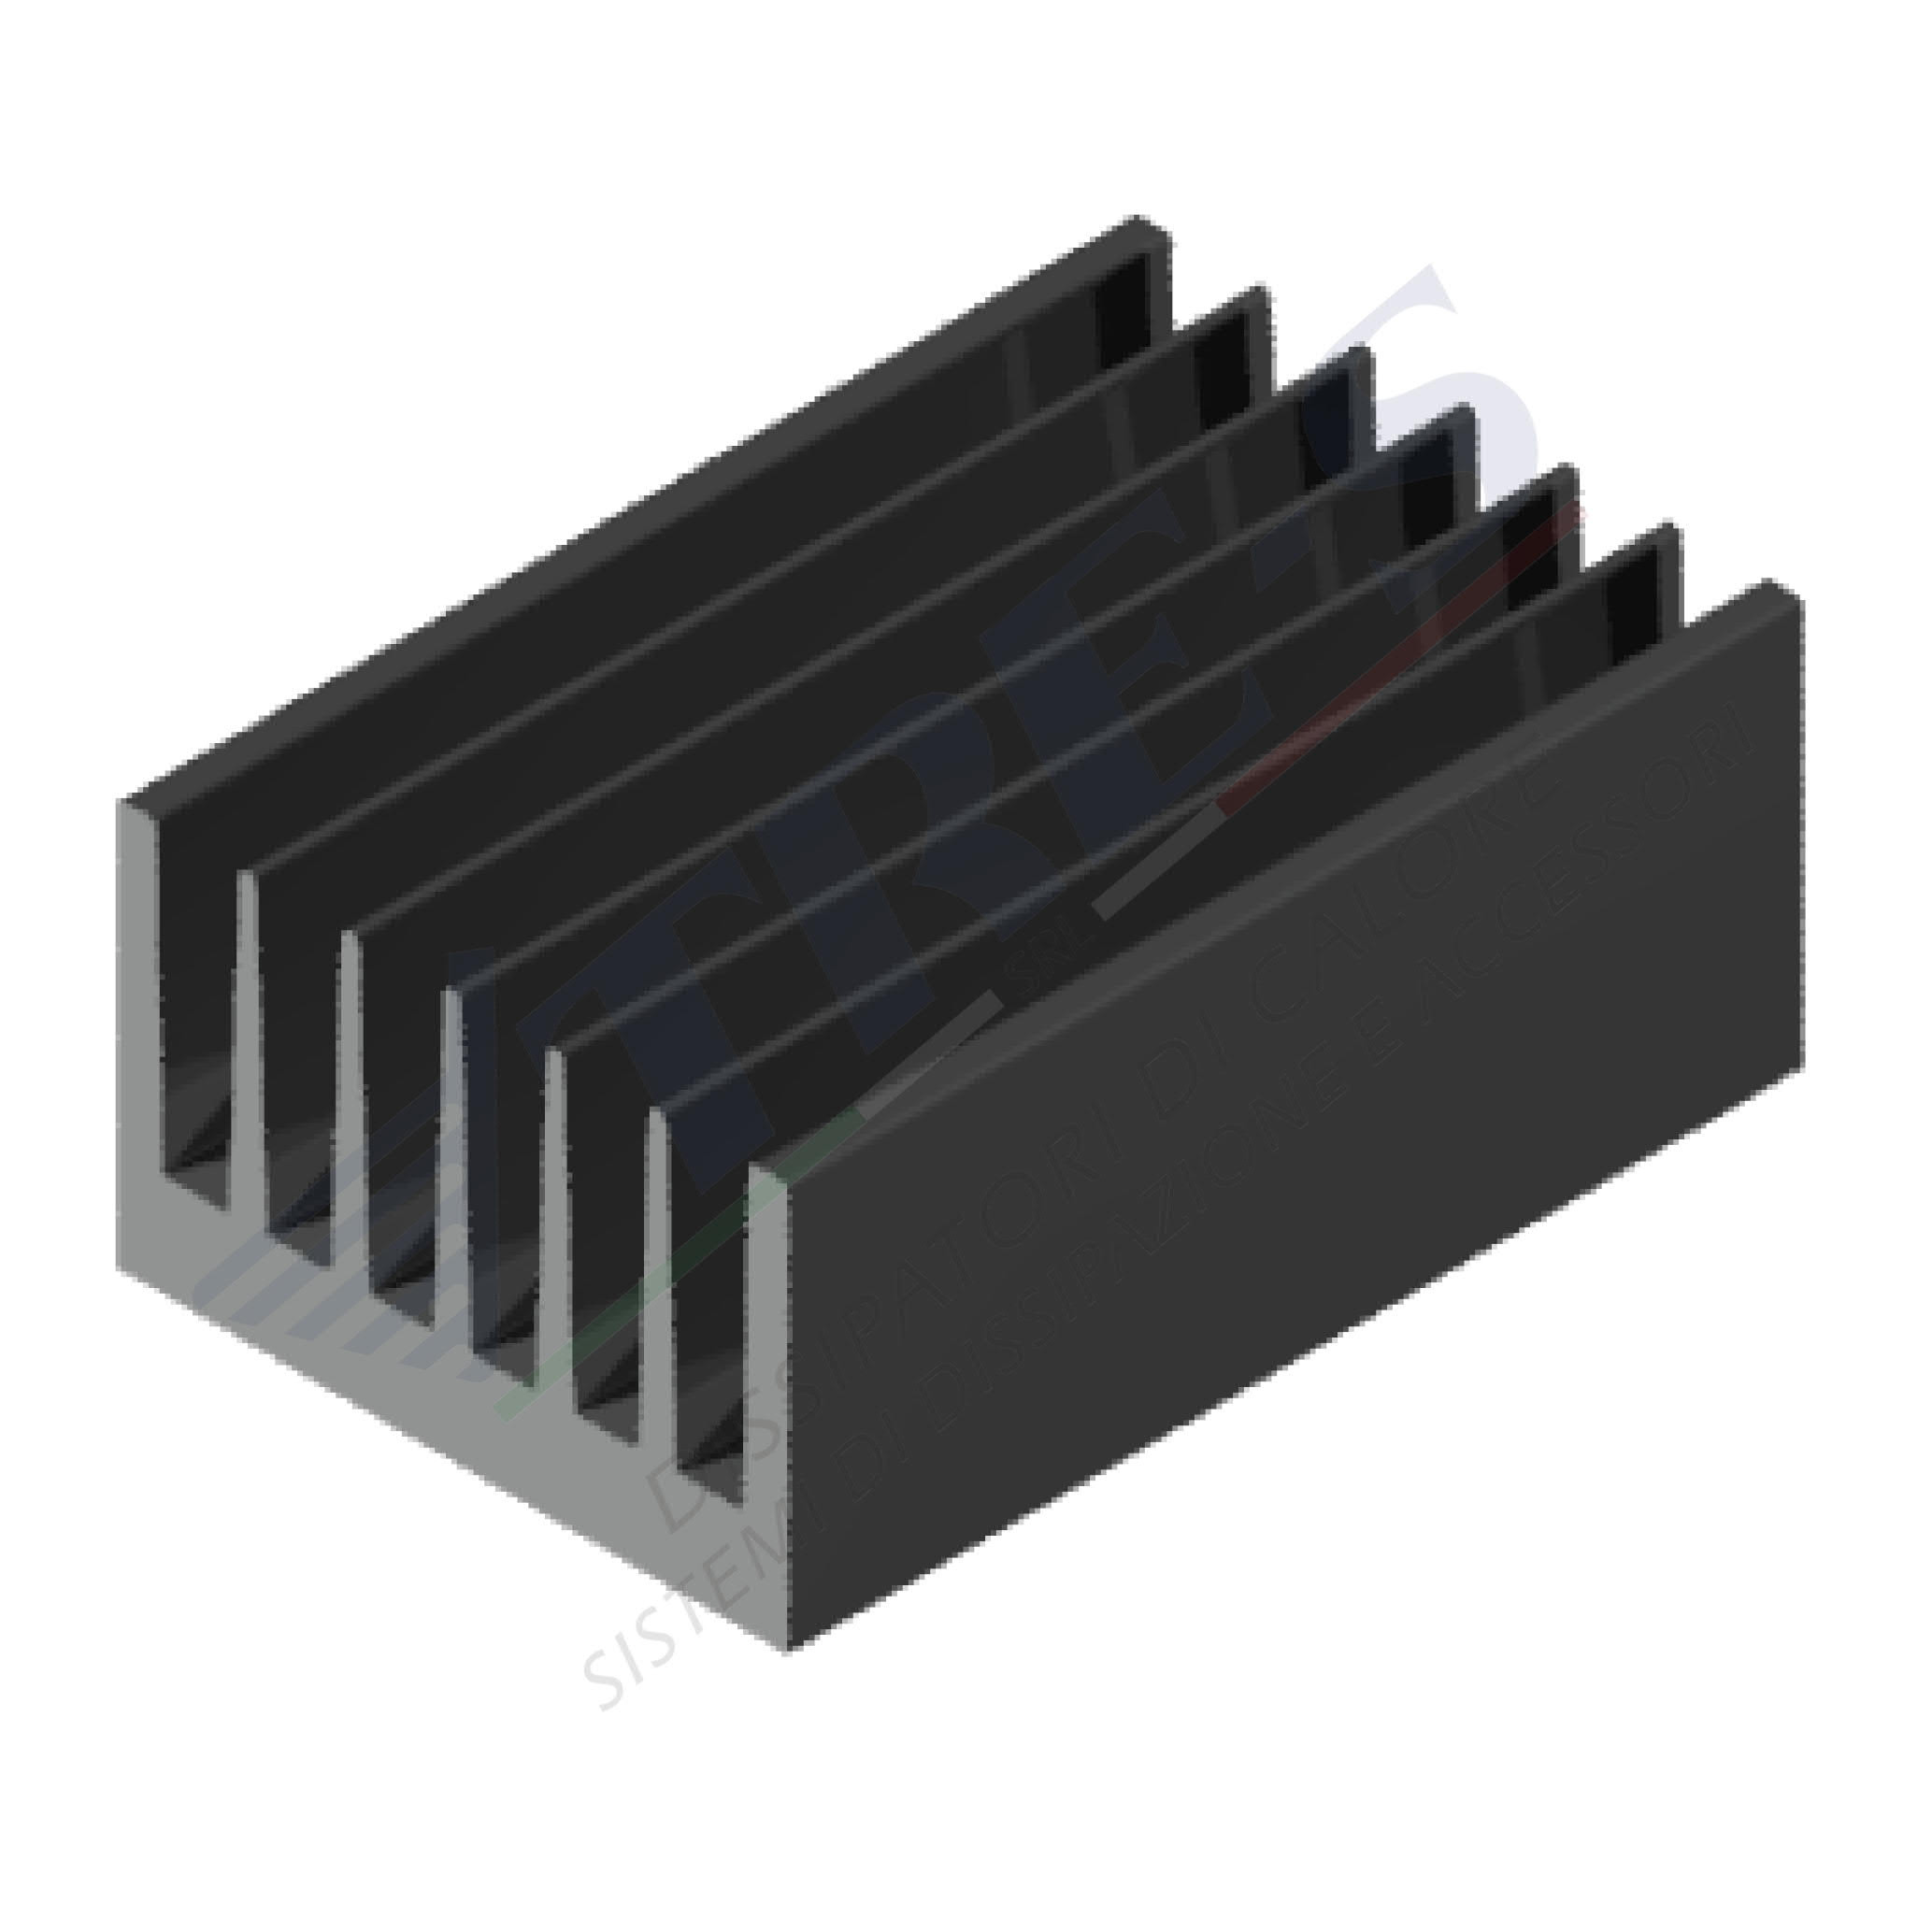 PRO1075 - Heat sinks for power modules